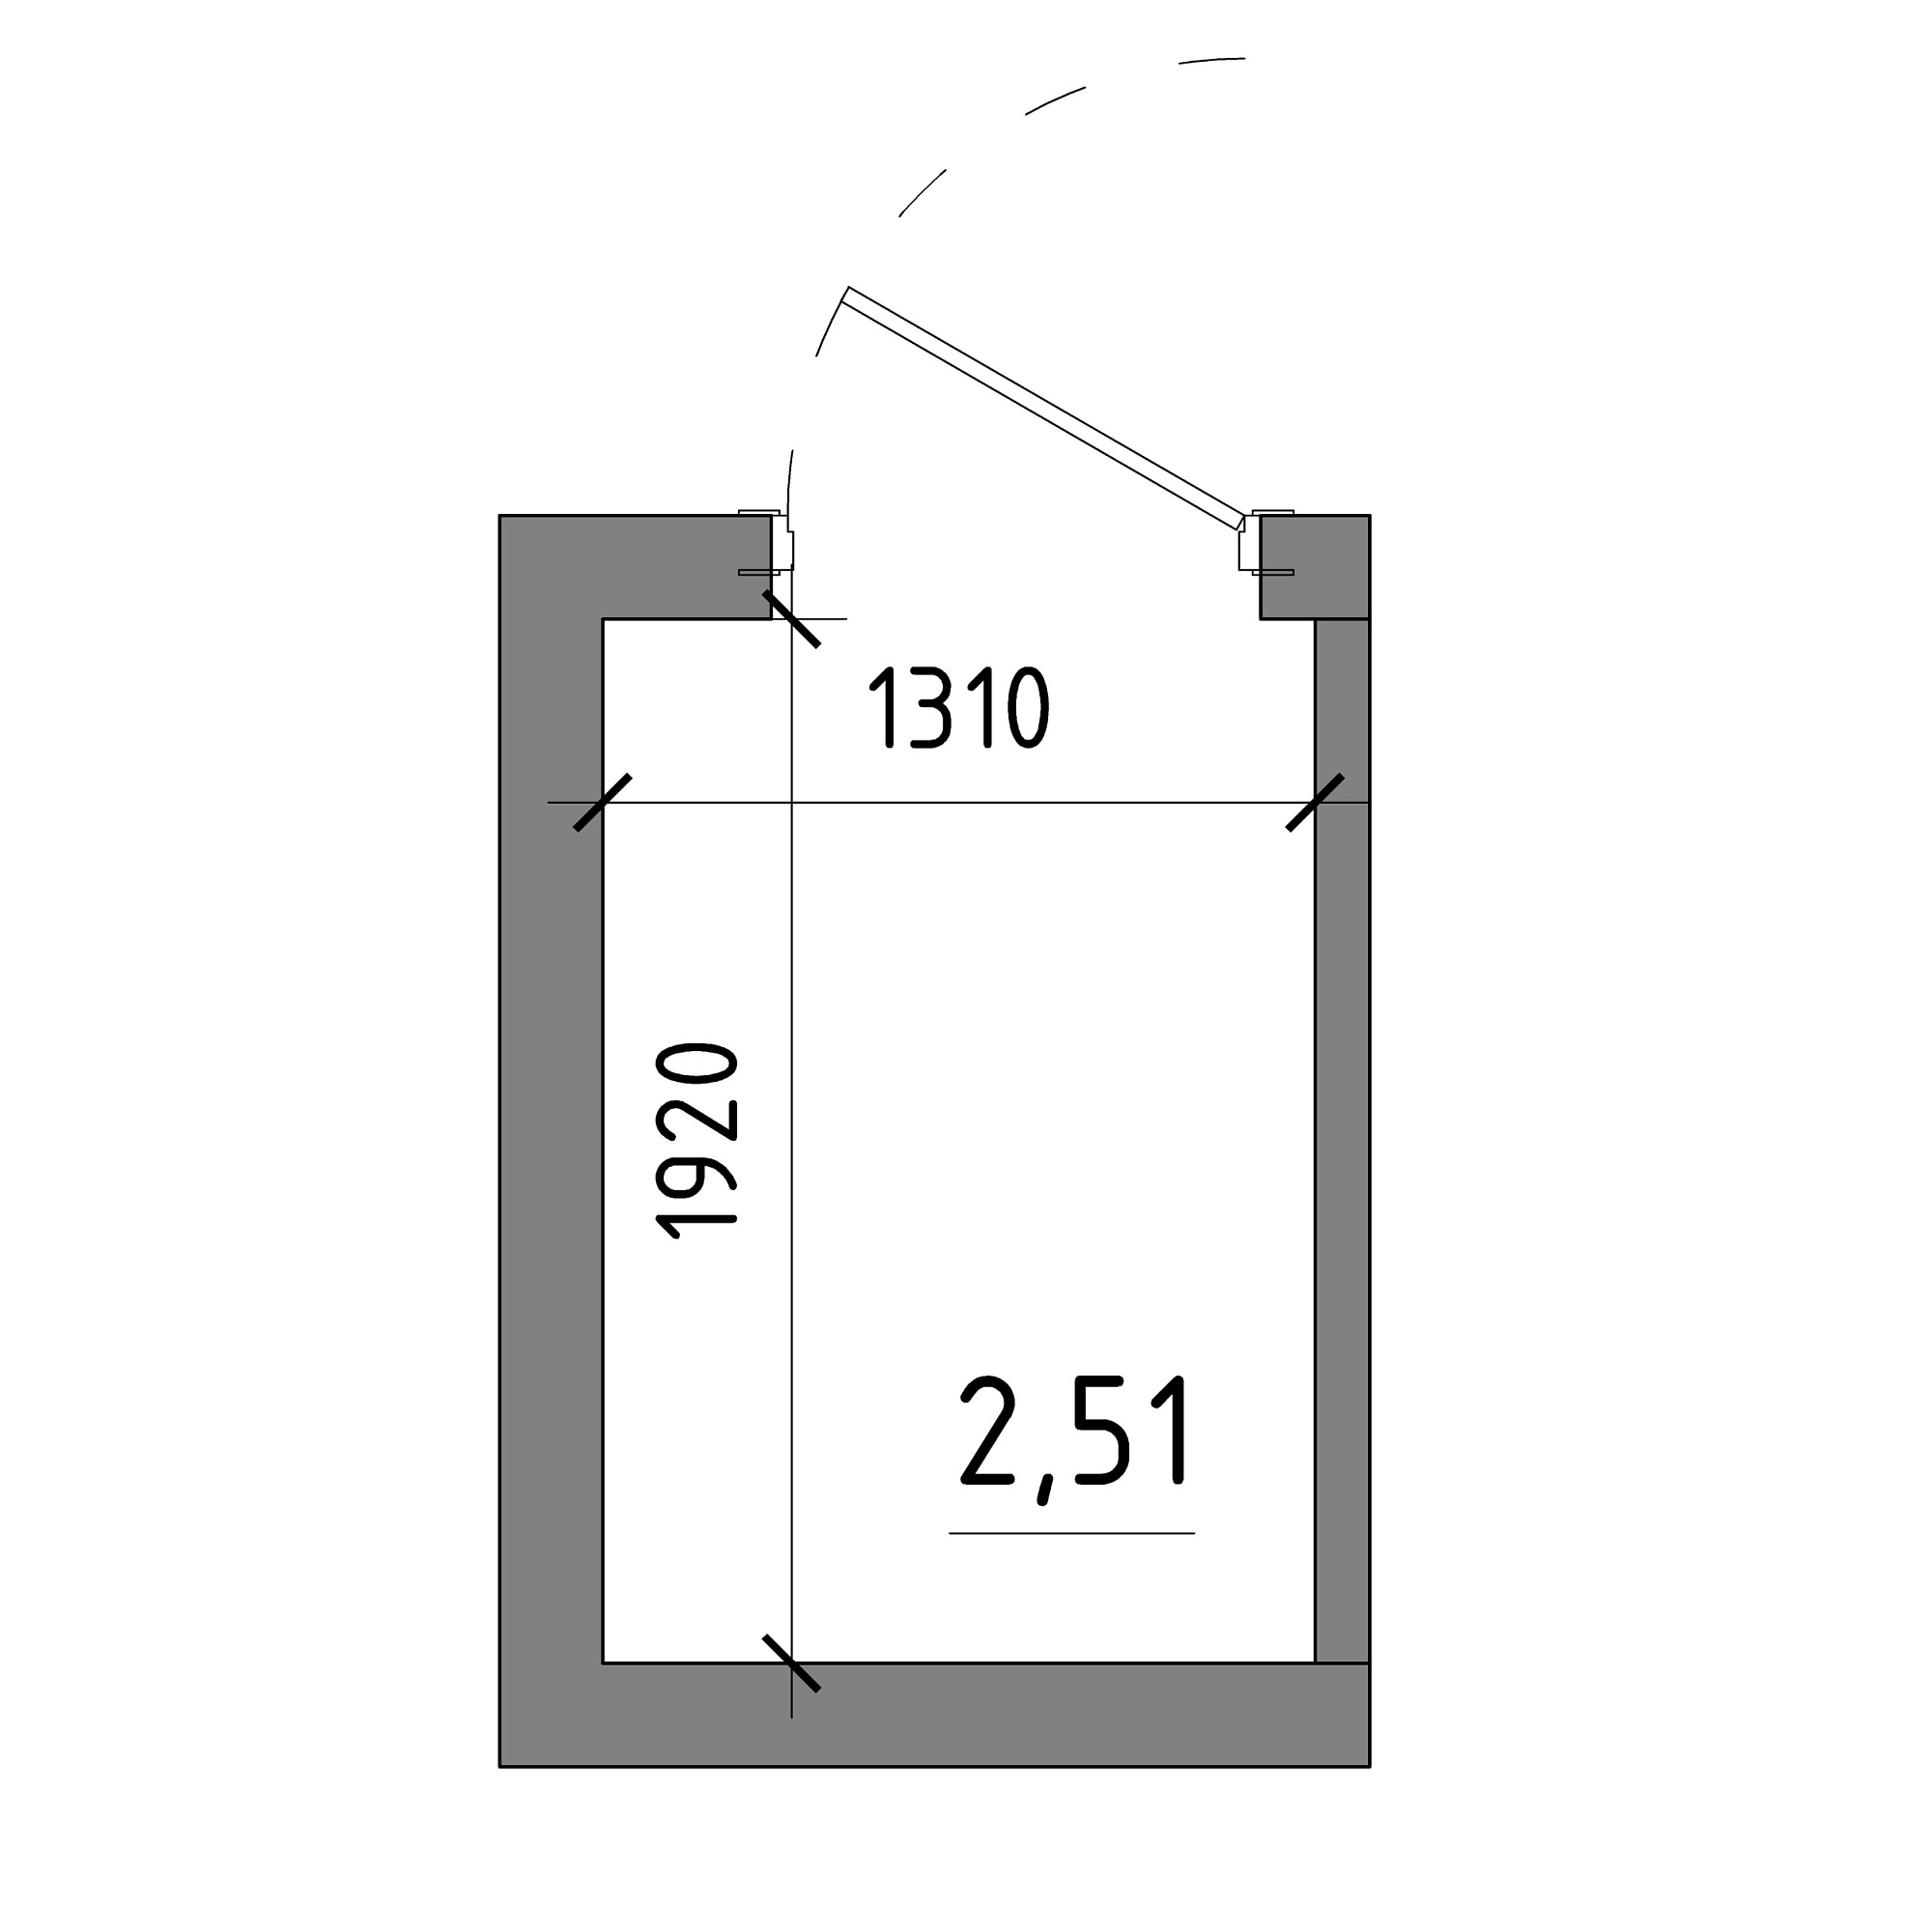 Planning Storeroom area 2.51m2, AB-17-08/К0002.